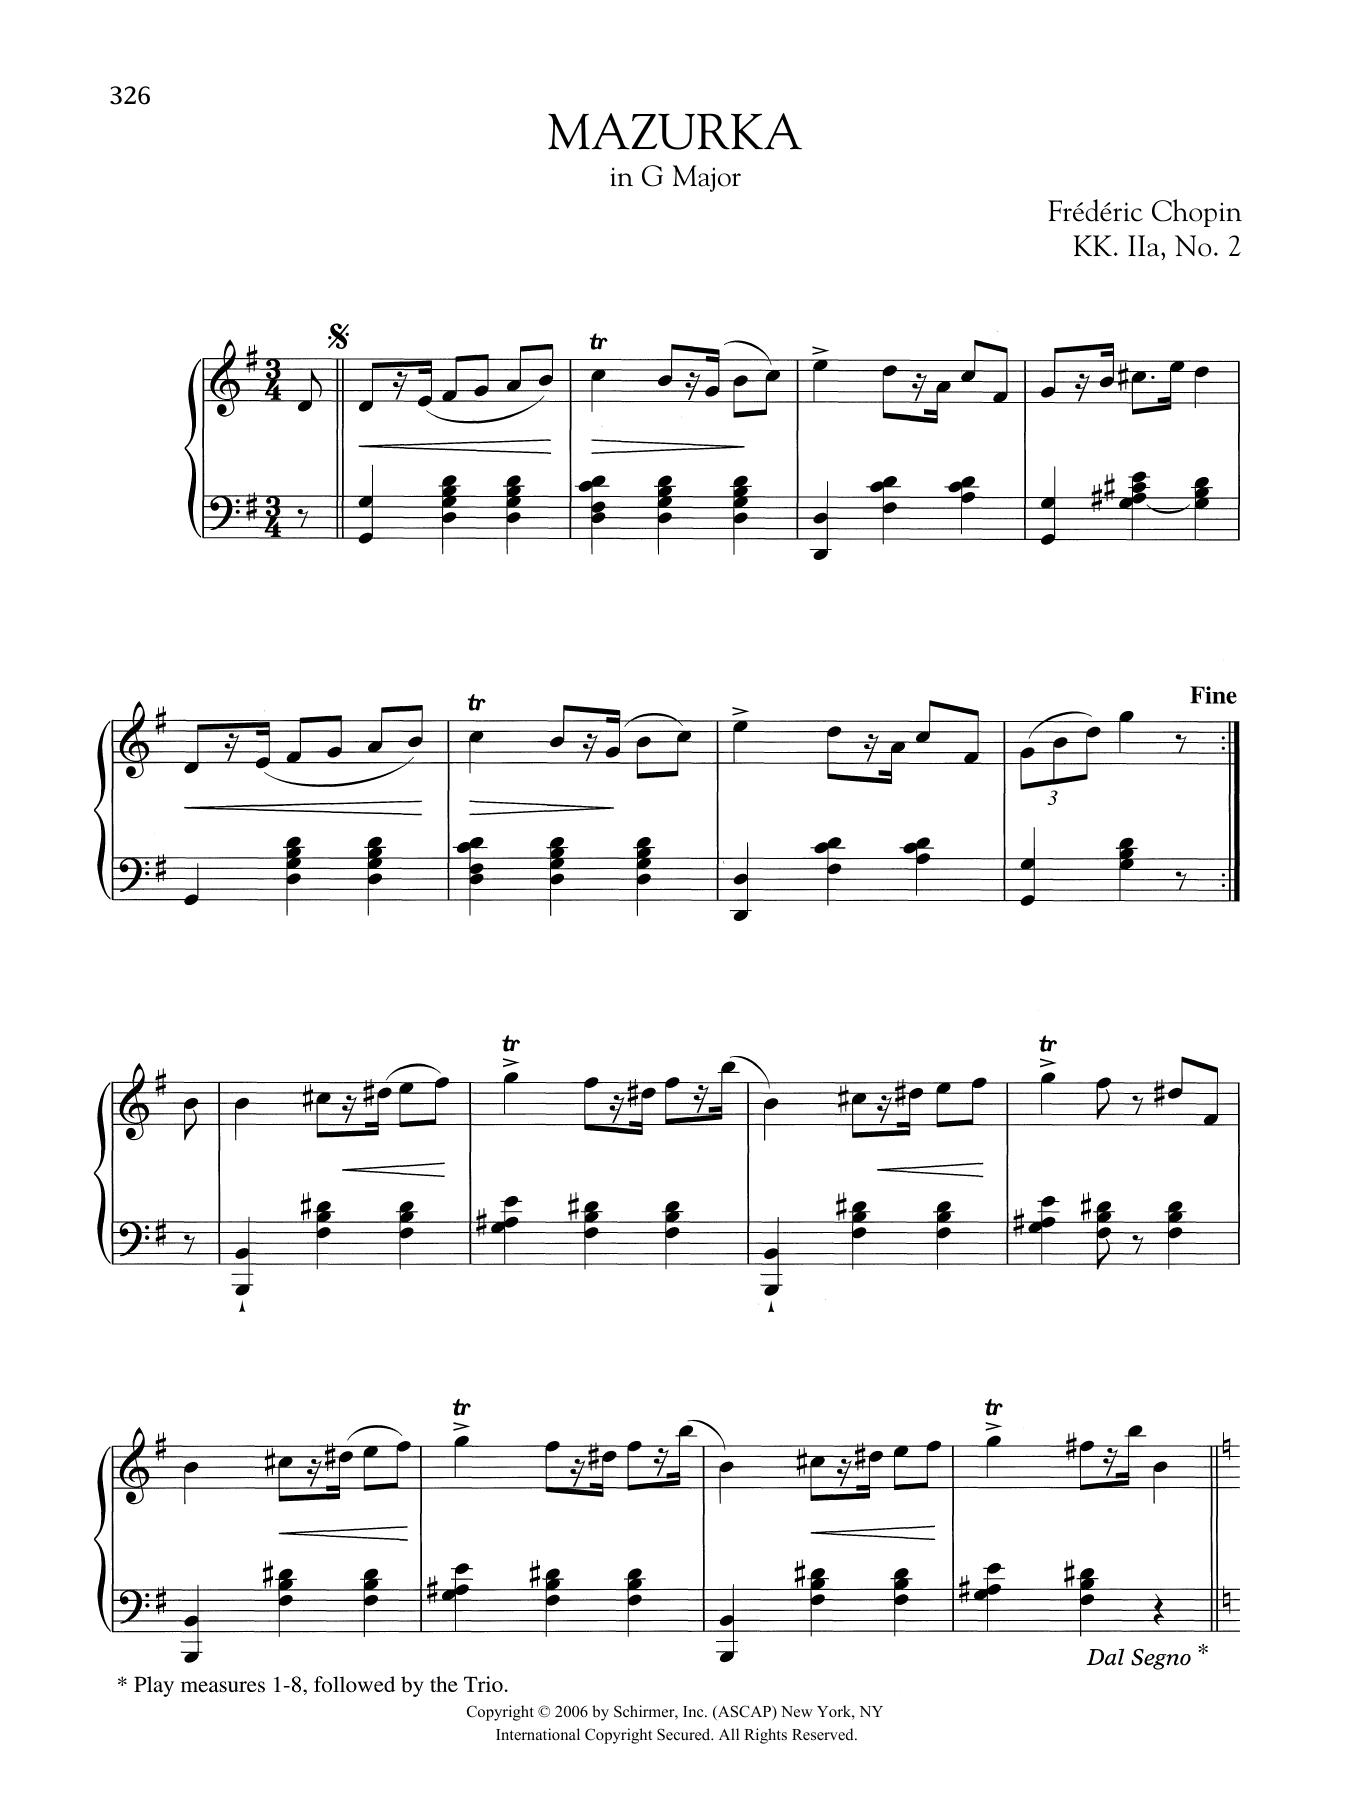 Download Frederic Chopin Mazurka in G Major, KK. IIa, No. 2 Sheet Music